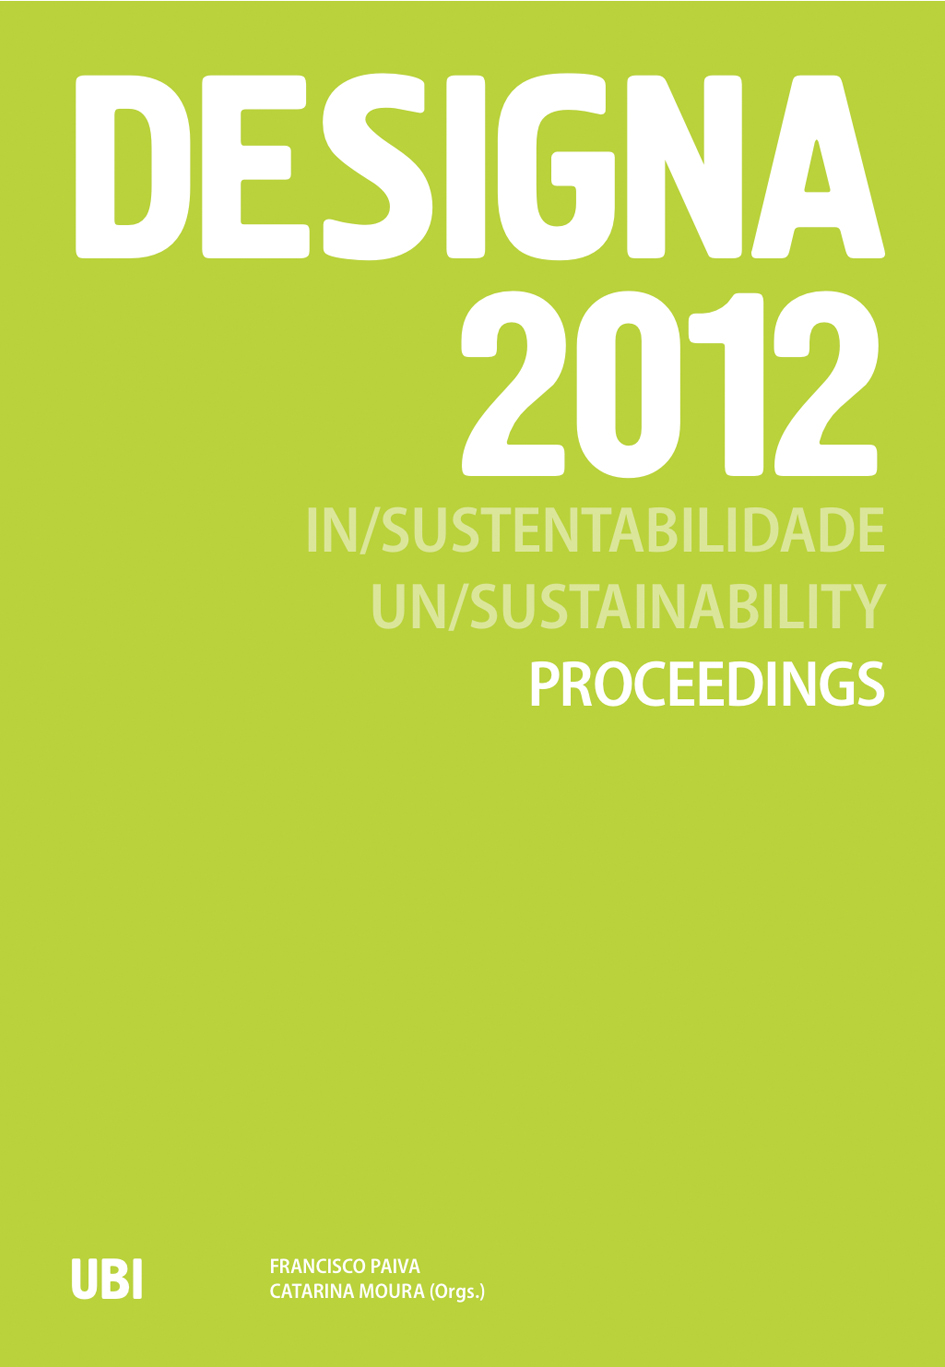 Capa: Francisco Paiva, Catarina Moura (Orgs.) (2013) DESIGNA 2012 - Un/Sustainability. Communication  +  Philosophy  +  Humanities. .